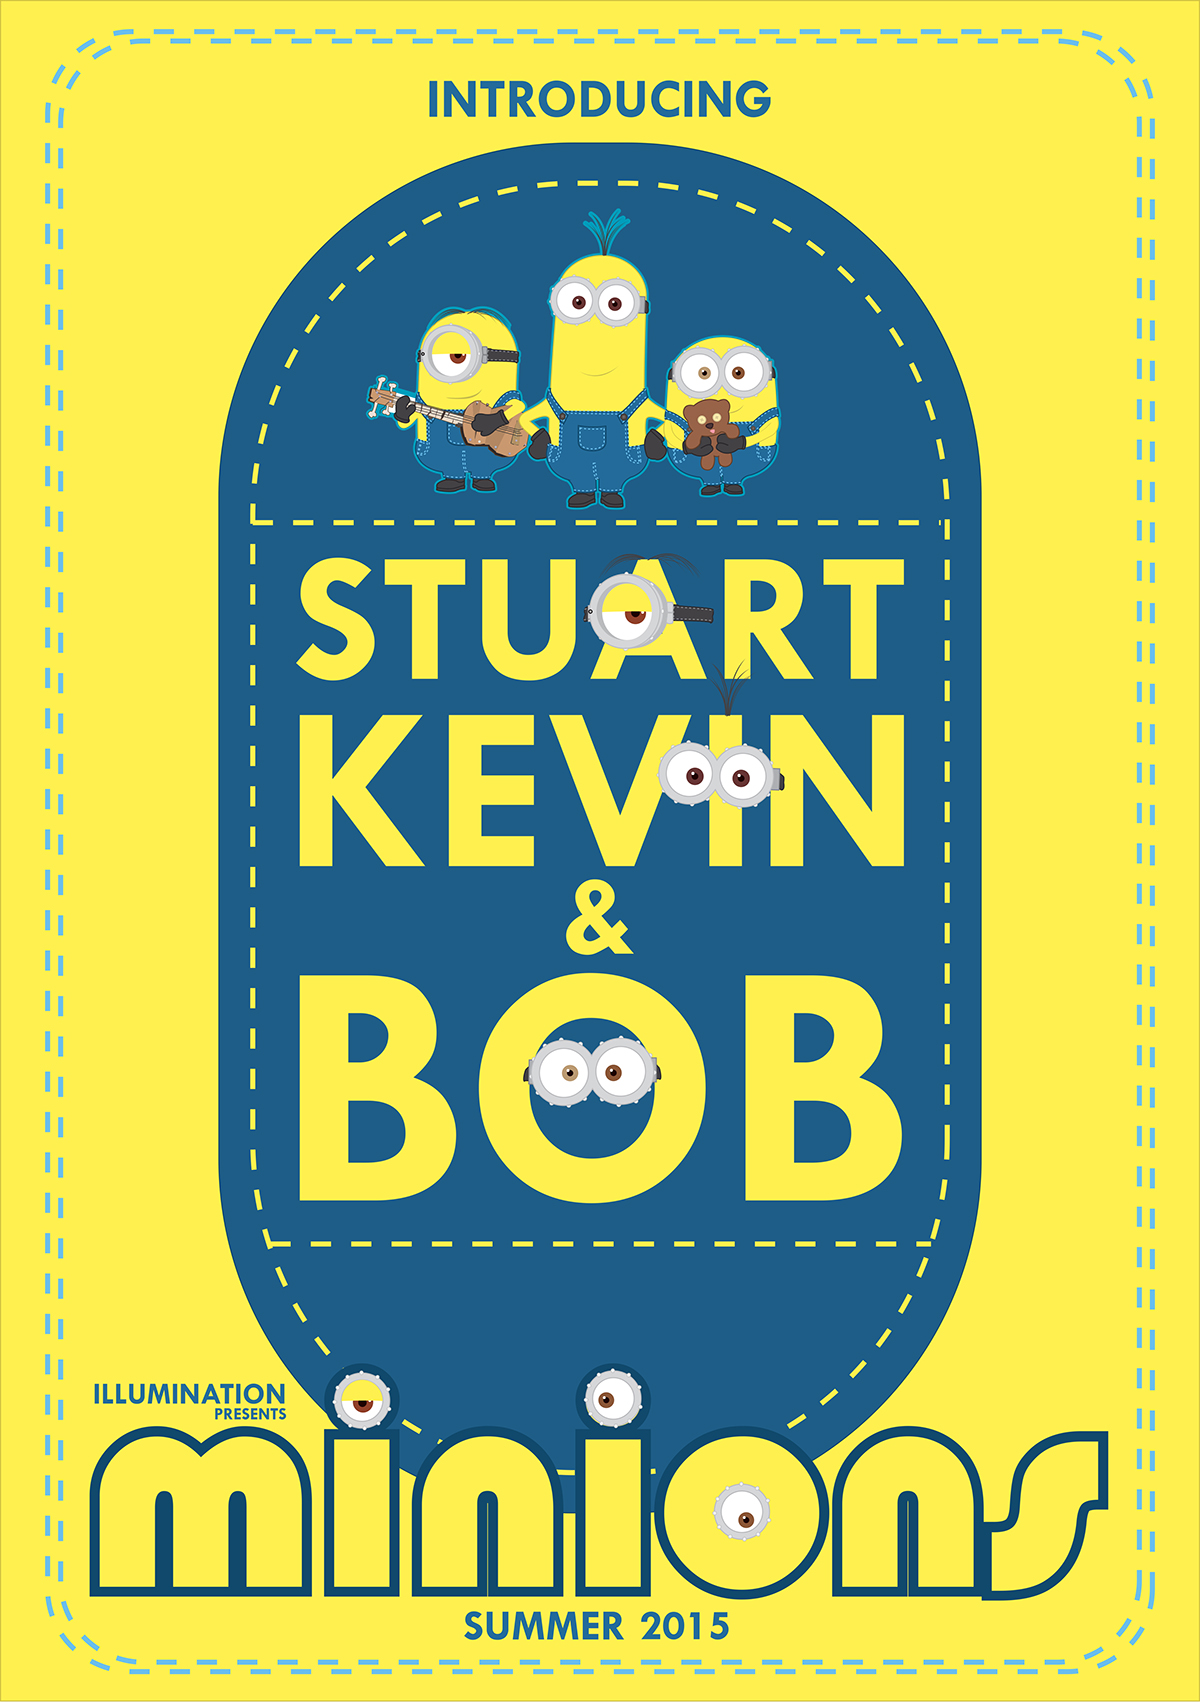 minions poster summer 2015year movie kevin Bob king Stuart new yellow blue funny happy illumination